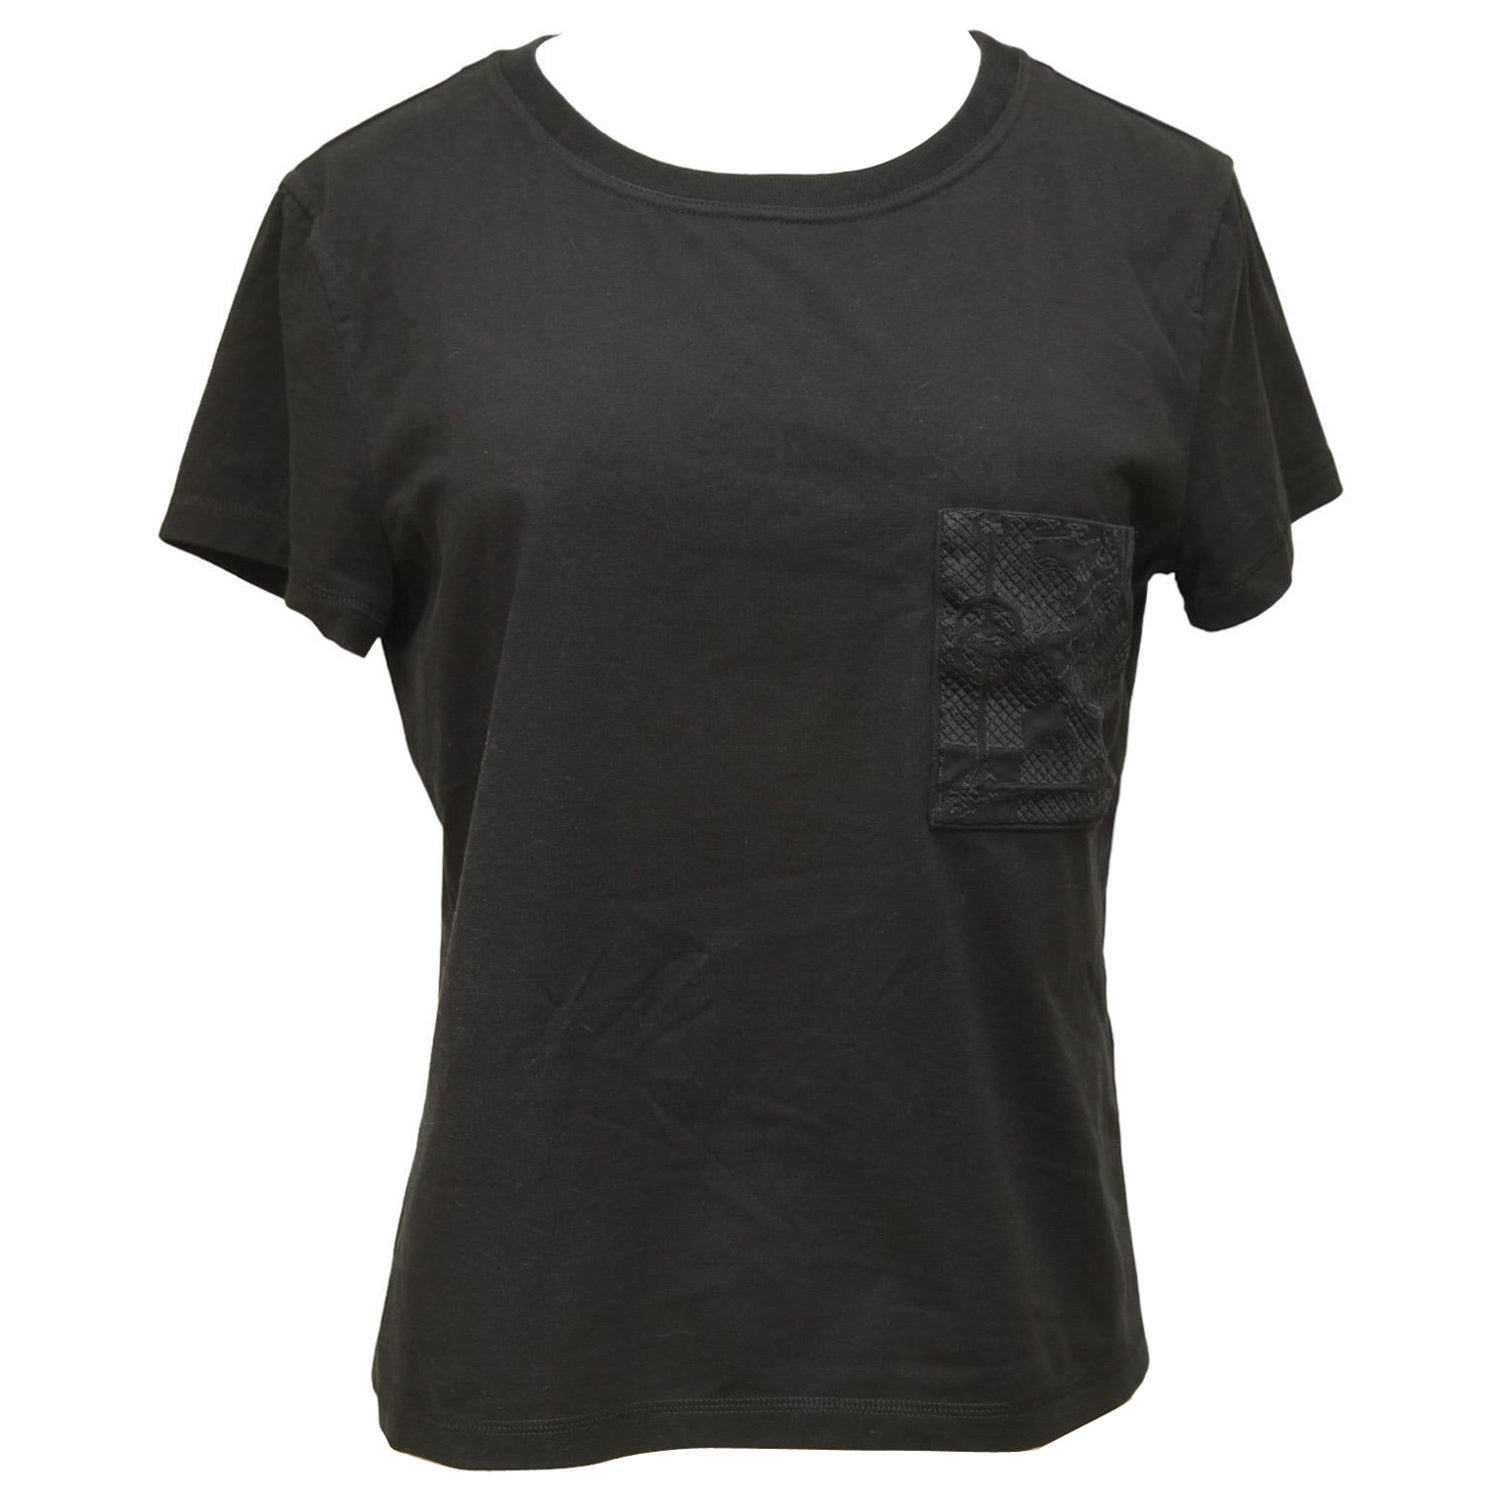 Tops Louis Vuitton Black T Shirt in Multi Color Blouse Size S Inter